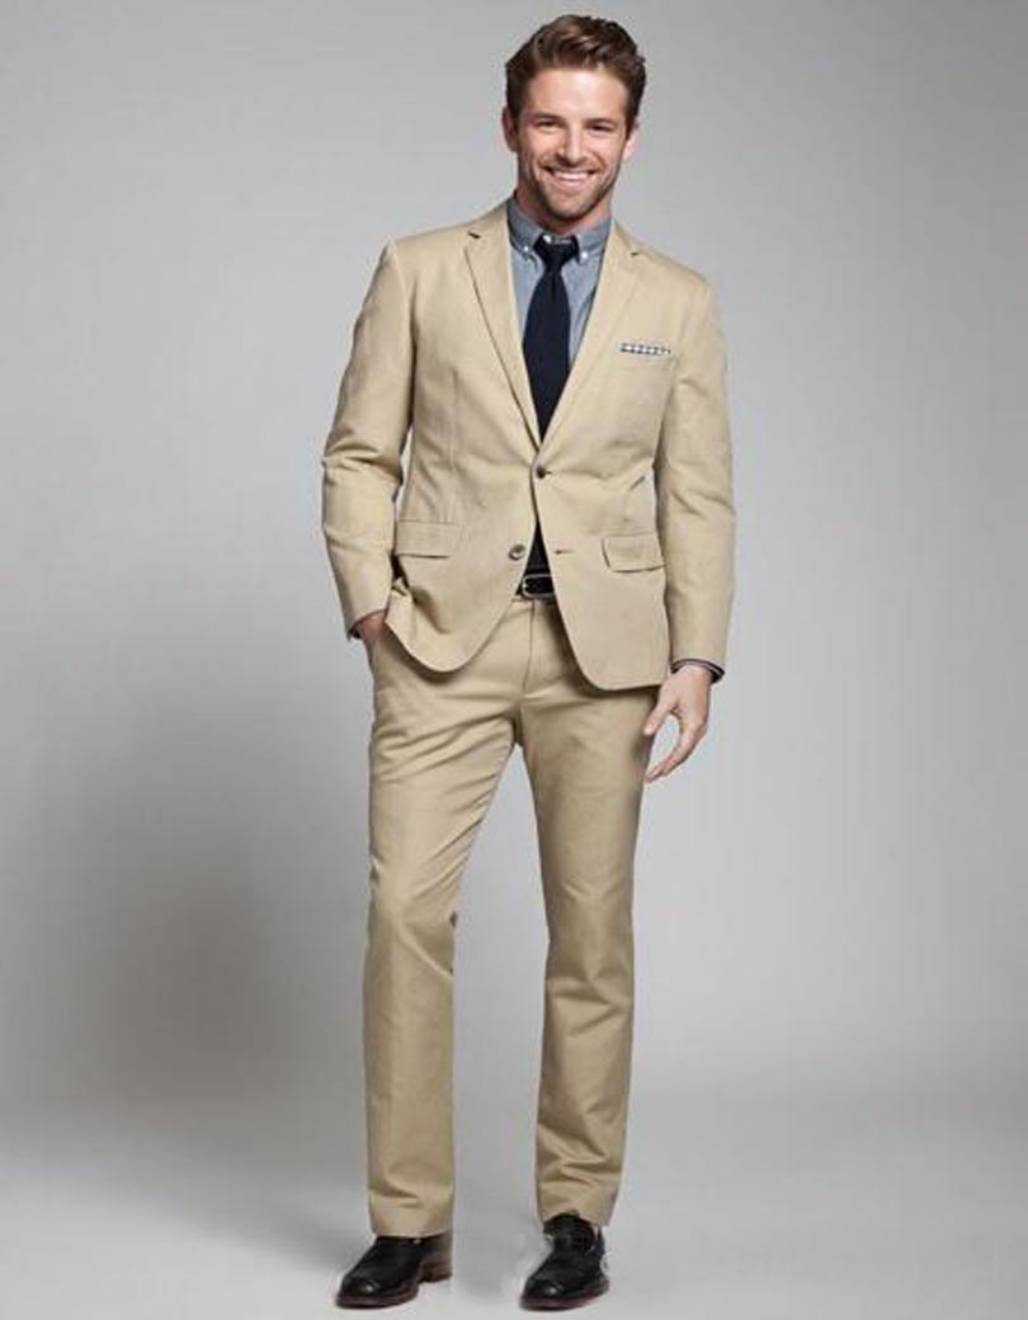 10 Amazing Wedding Suits for Men